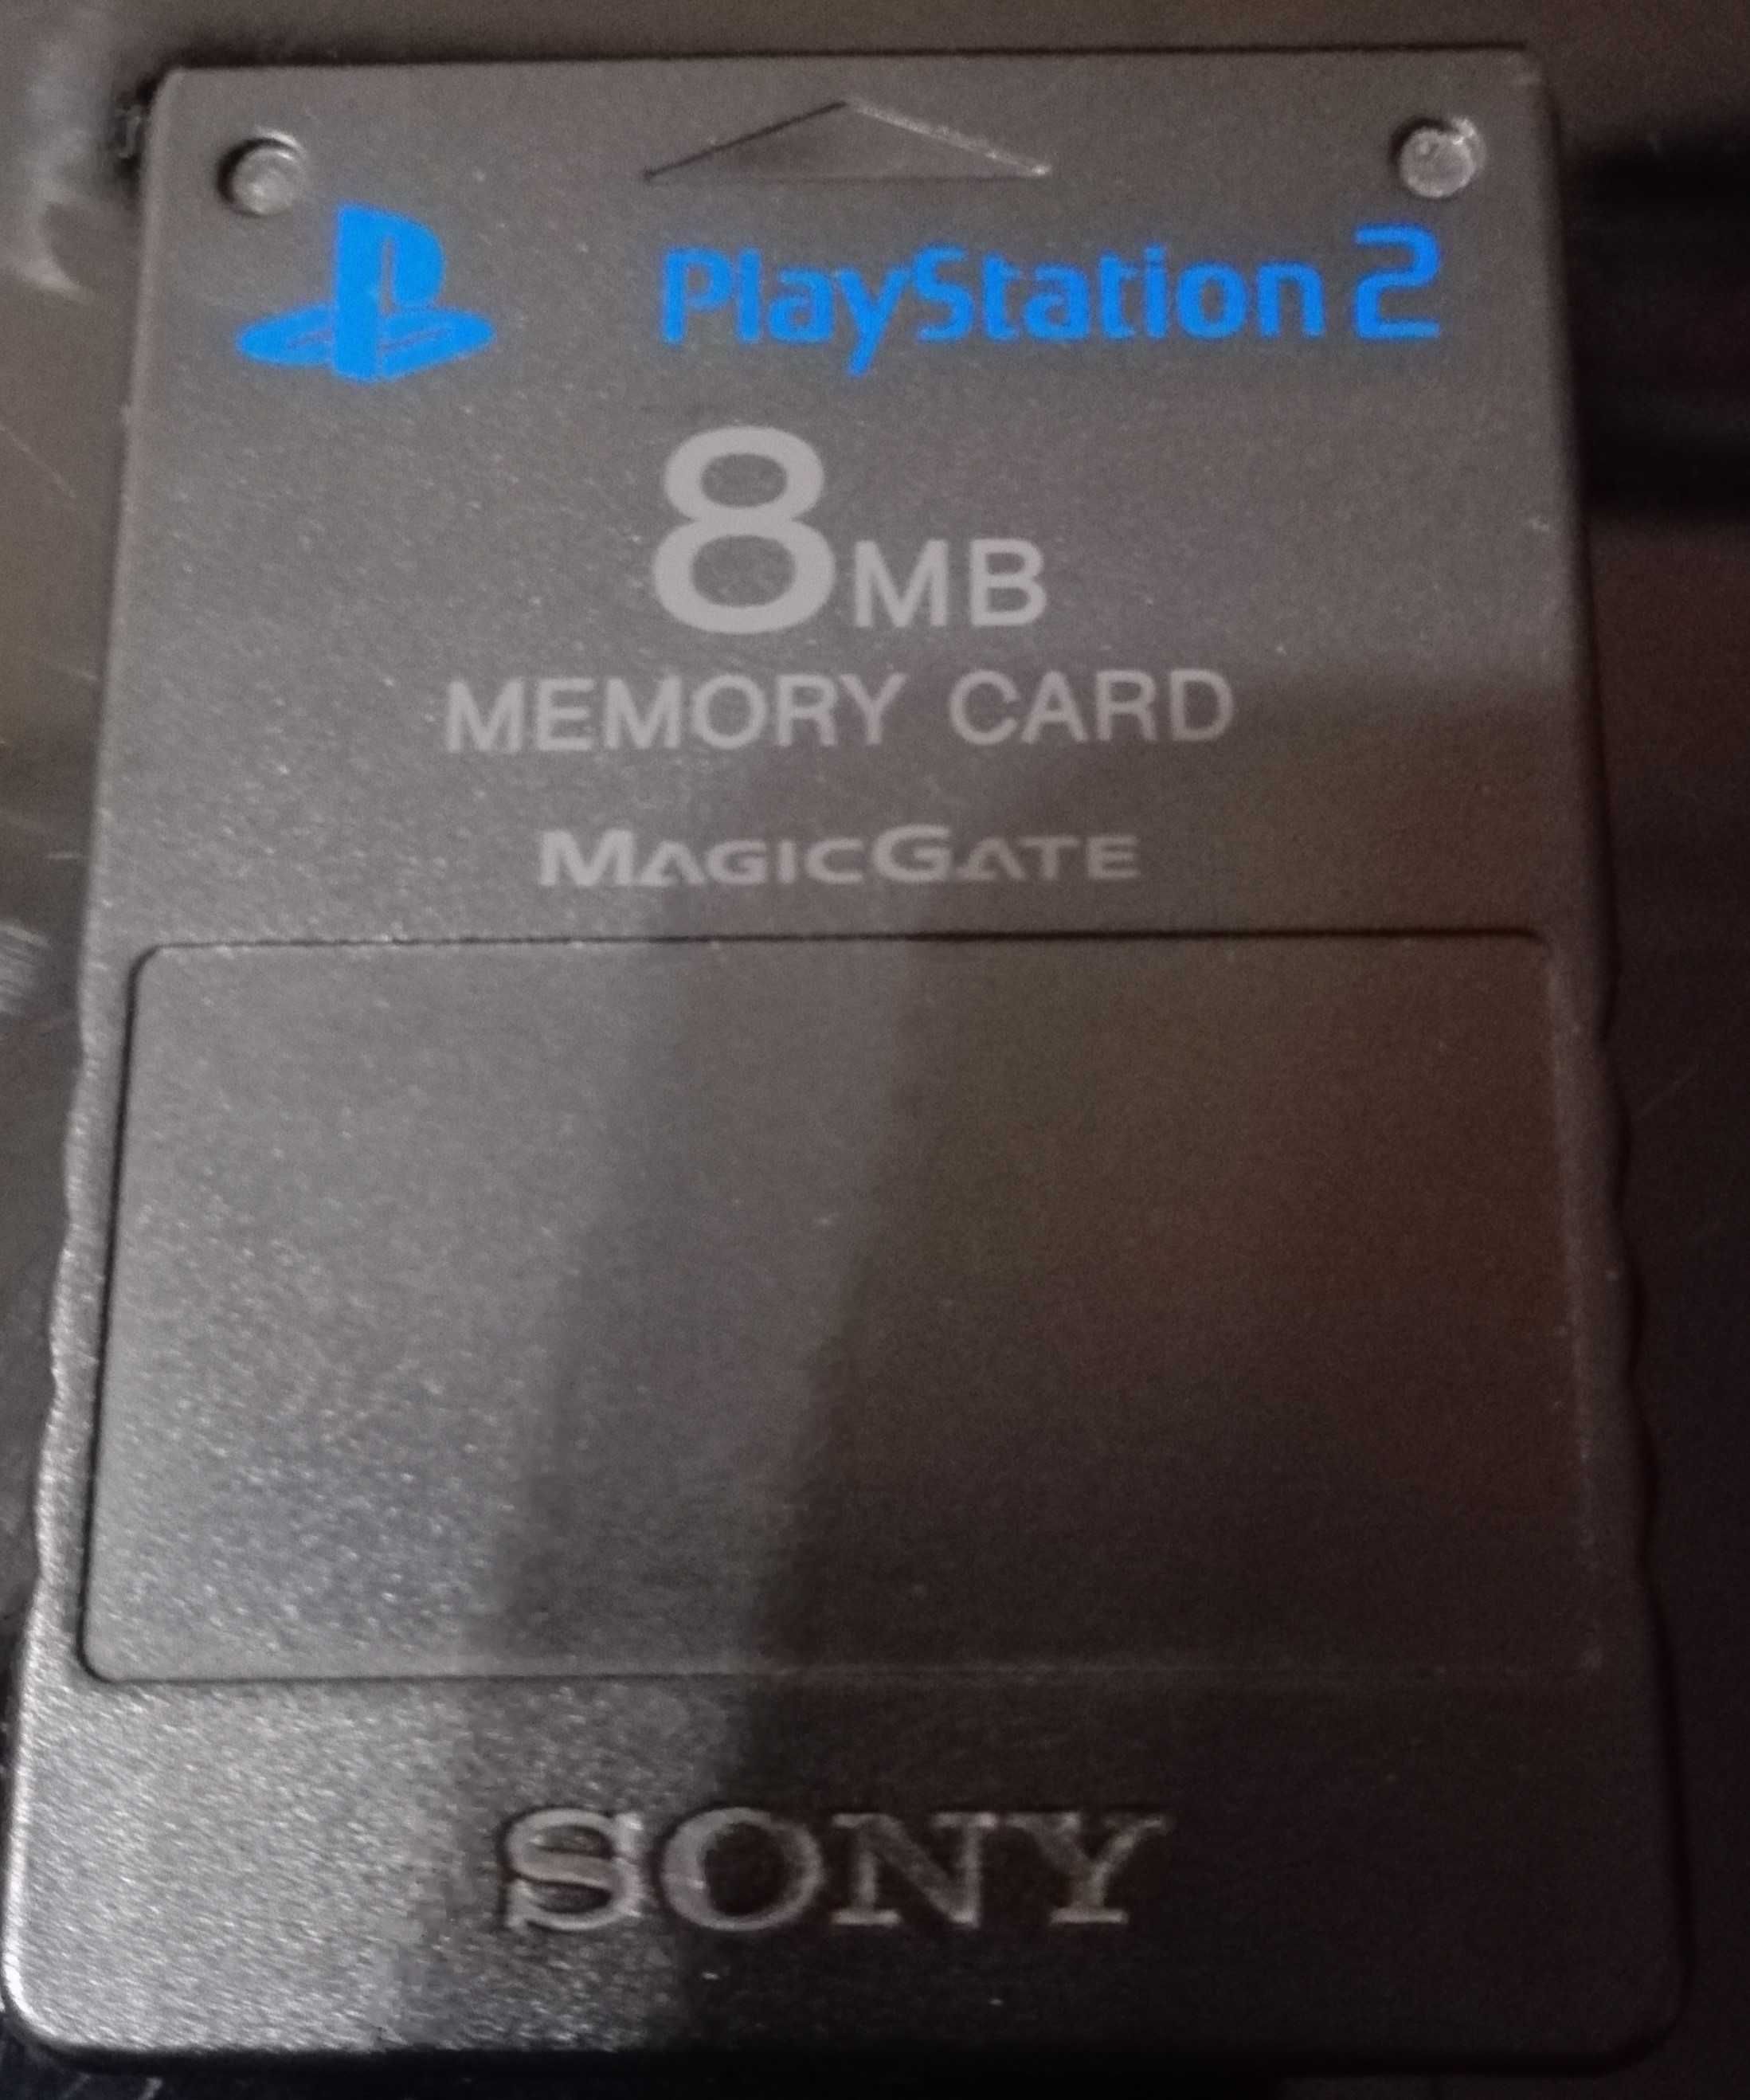 Sony PlayStation 2 + 11 jogos + extras